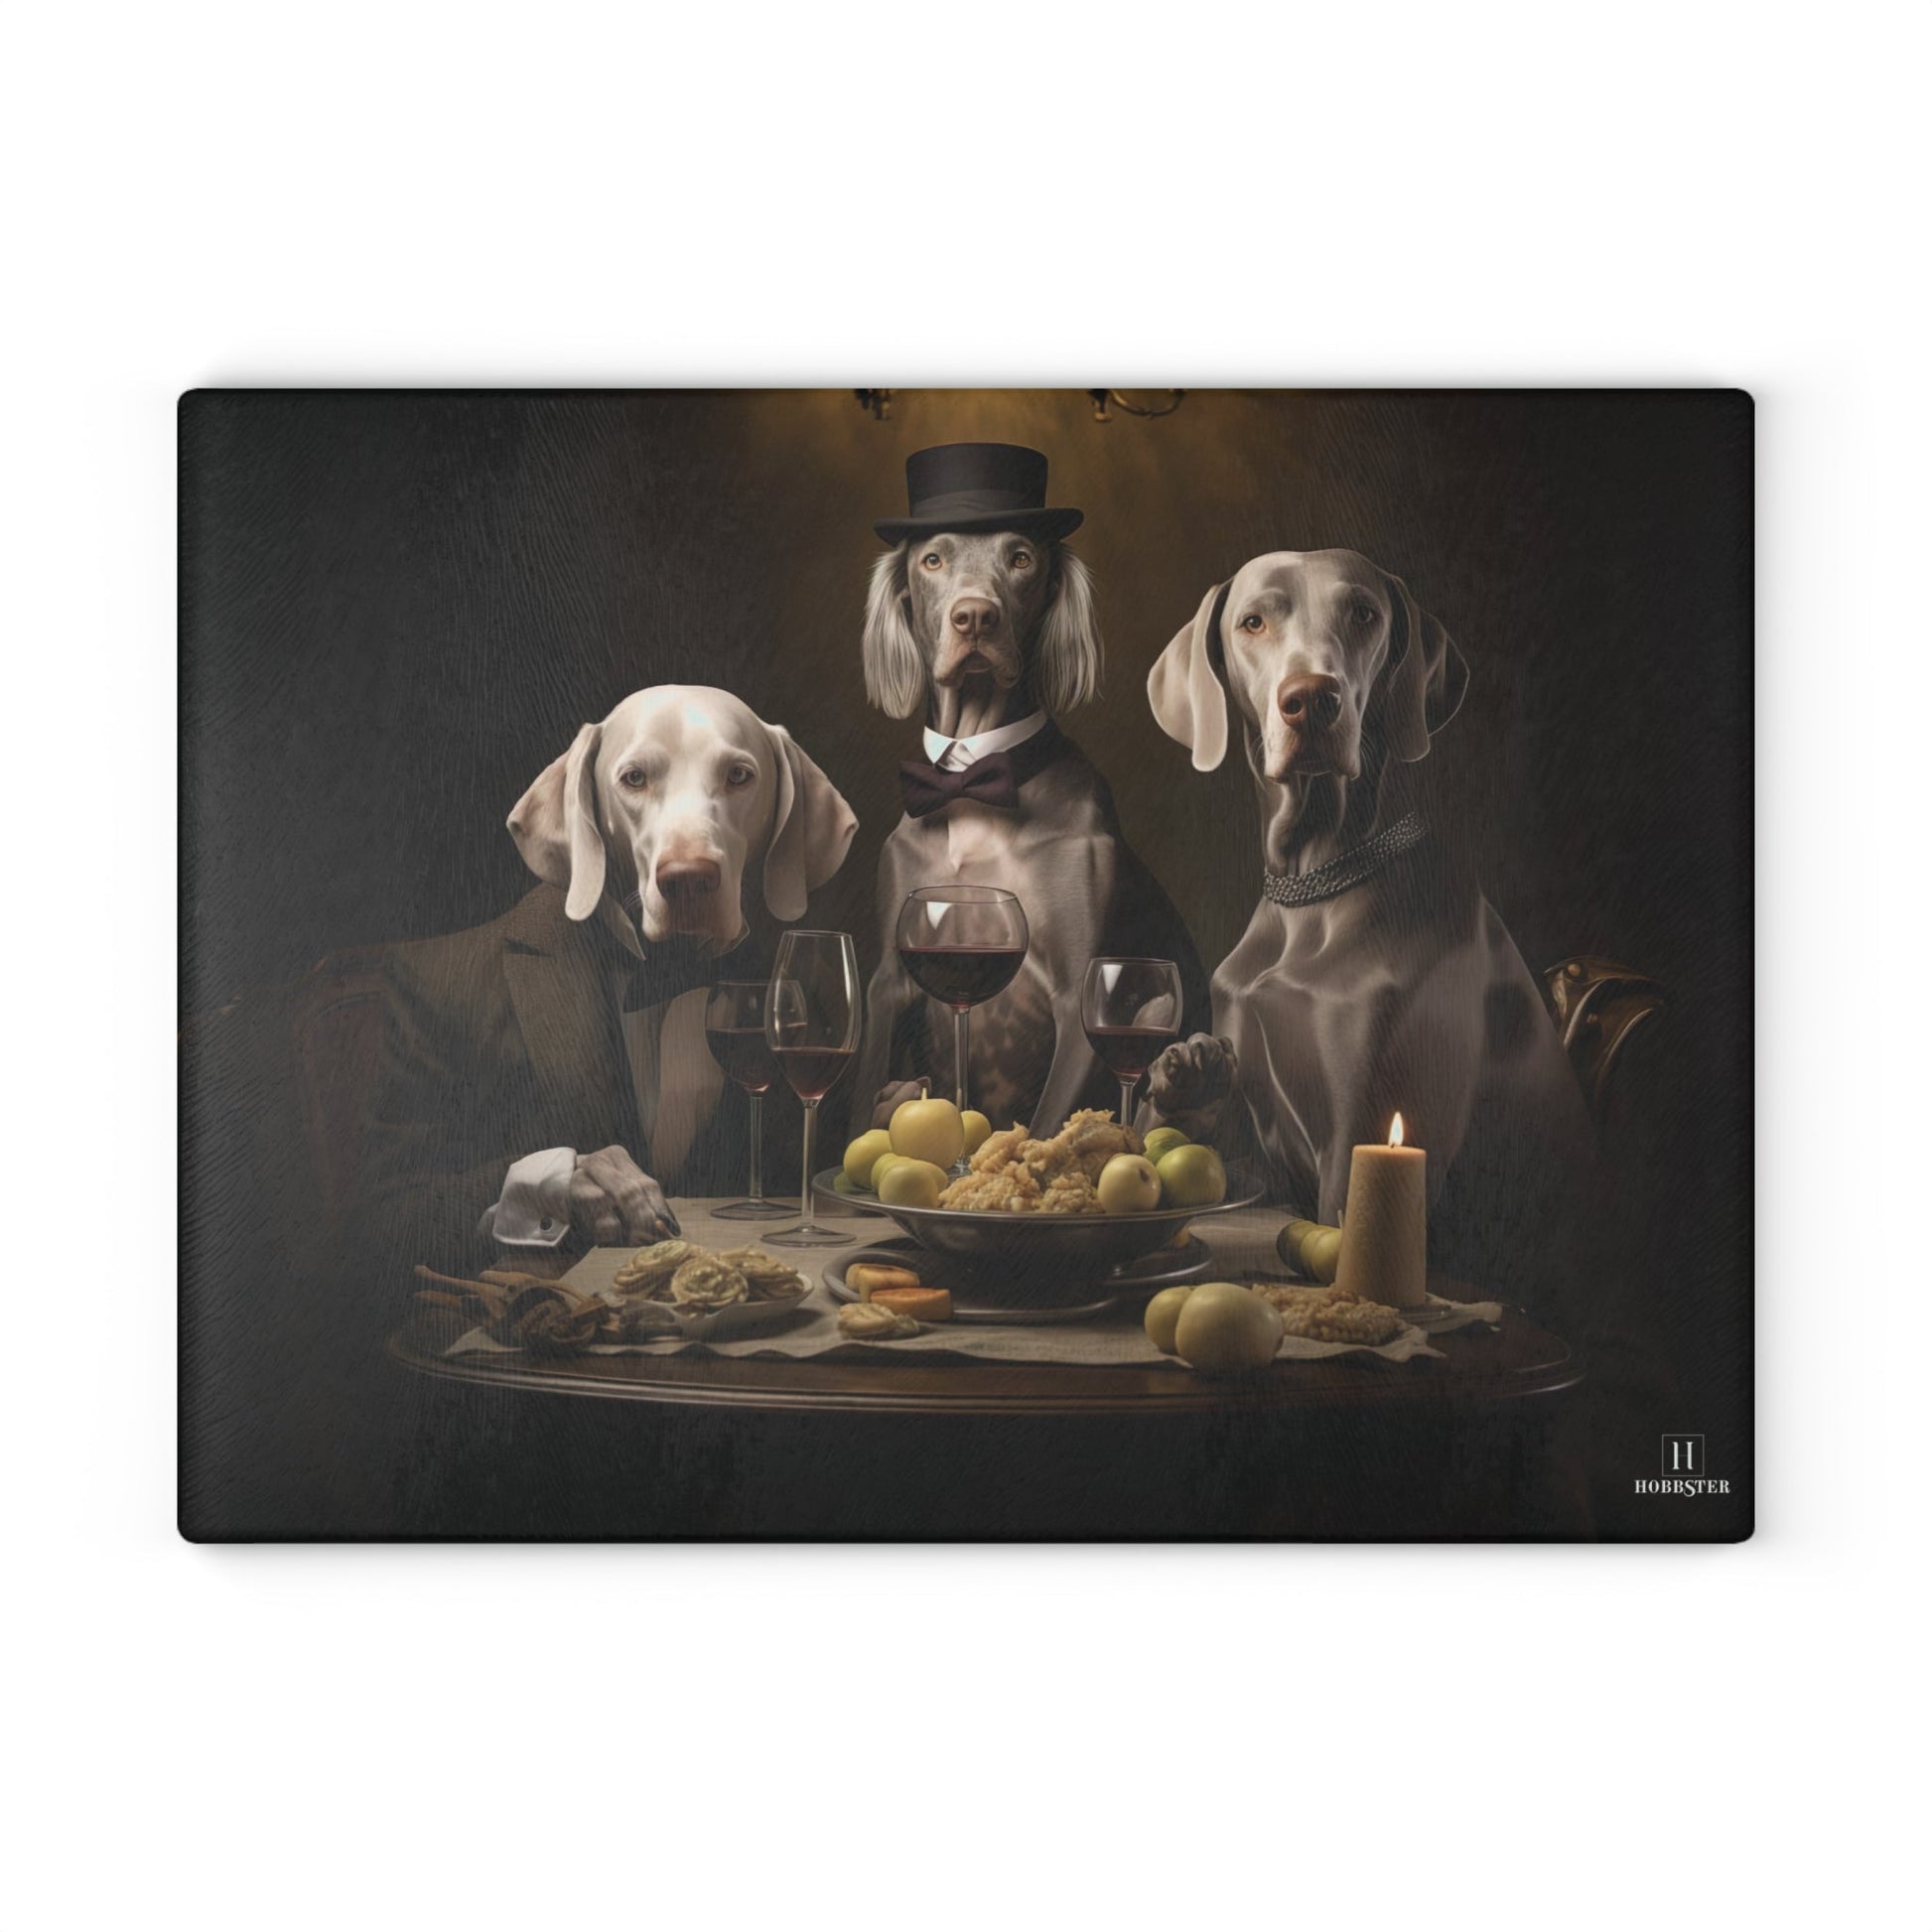 Custom design Glass Cutting Board featuring vintage Weimaraner dogs design - Hobbster